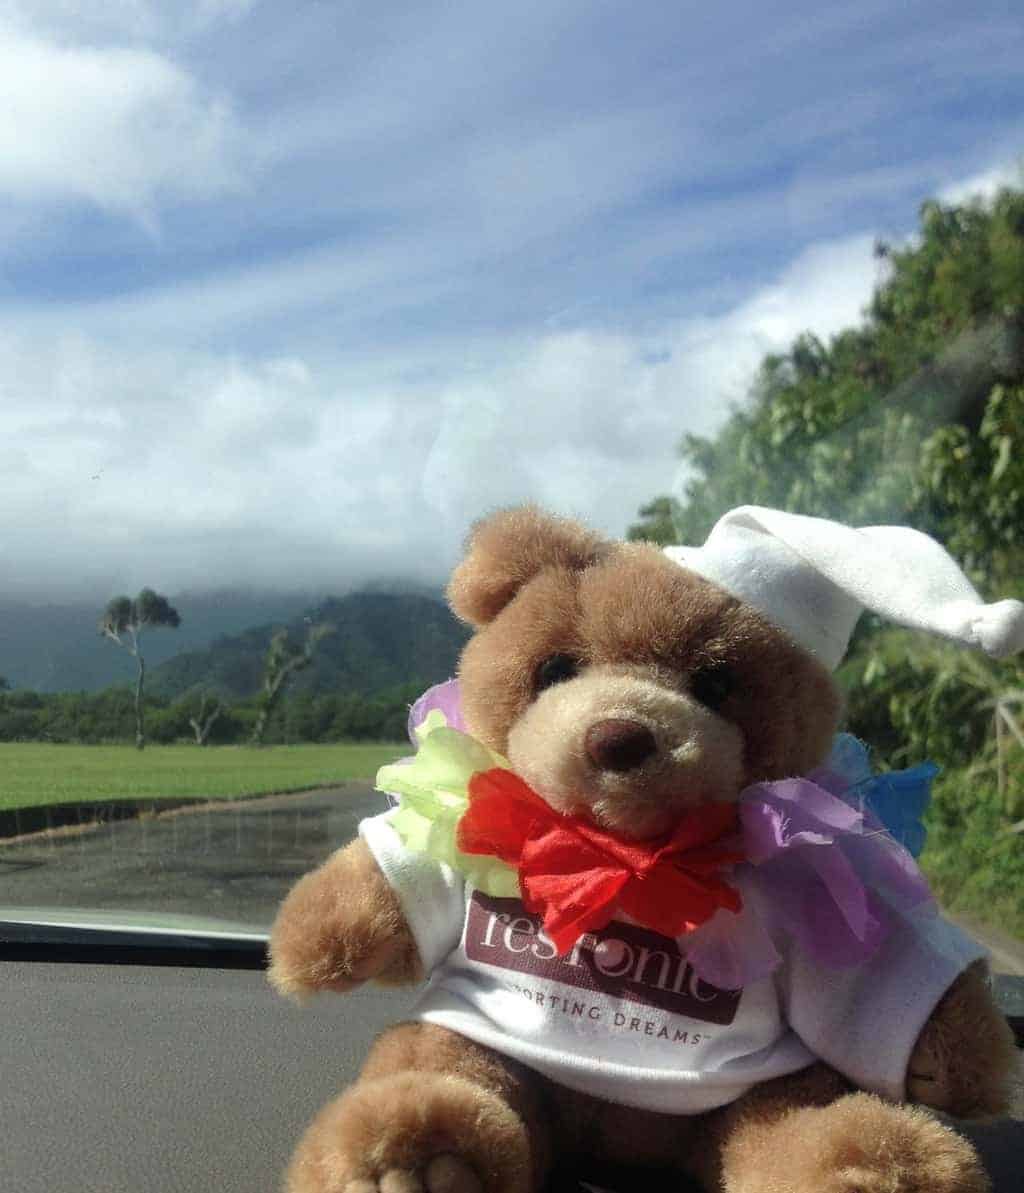 Resty the Restonic bear in Hawaii